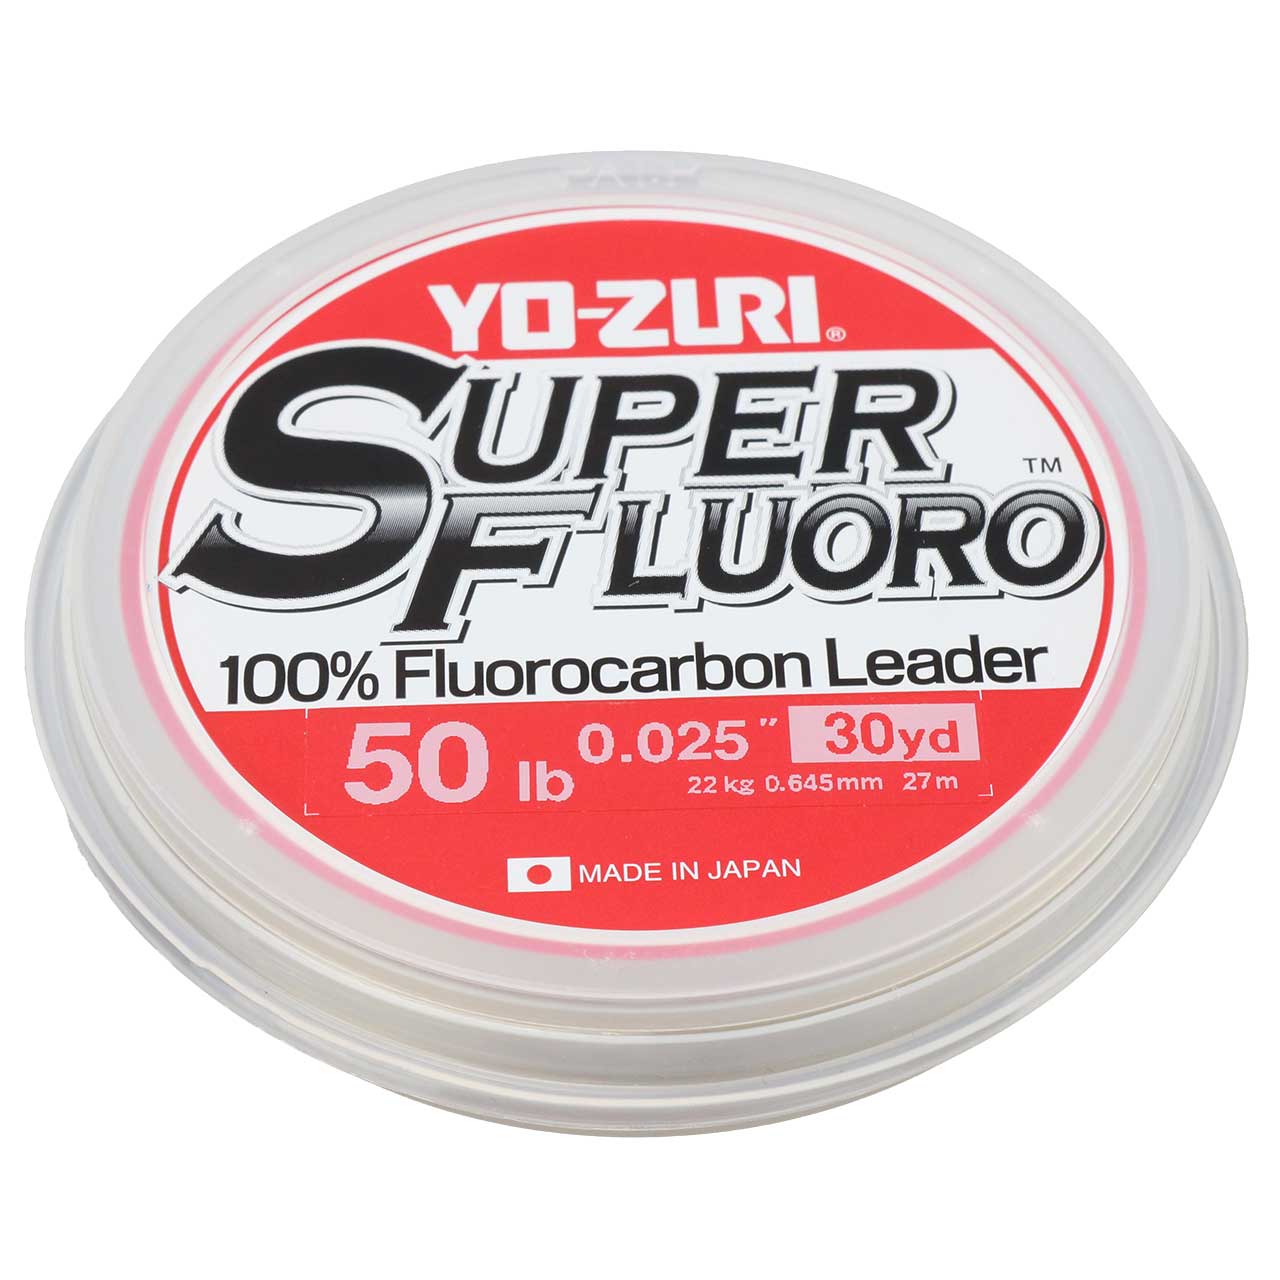 Yo-Zuri Superfluoro Leader Clear